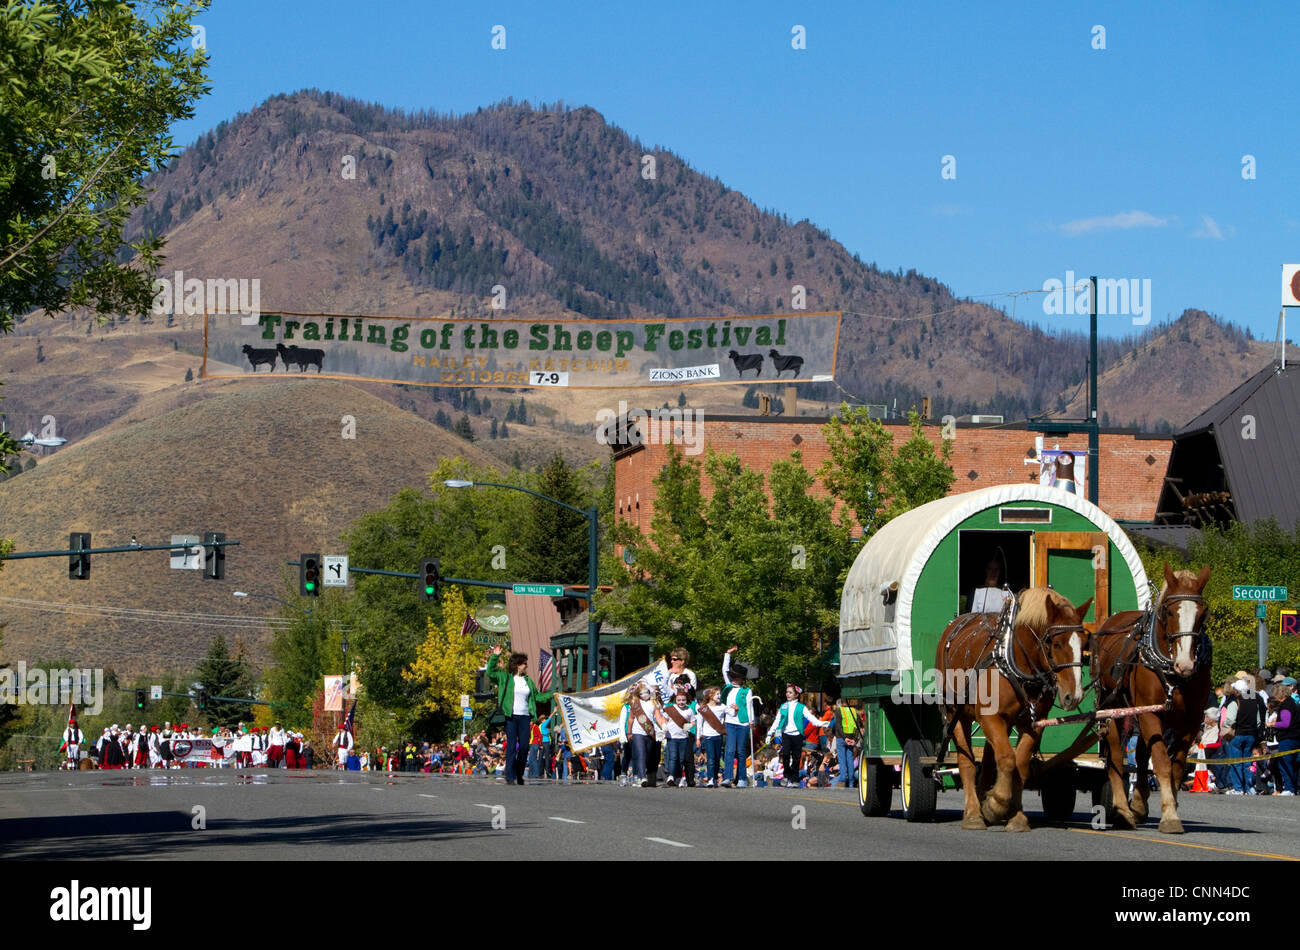 Historic sheep wagons in the Trailing of the Sheep Parade on Main Street in Ketchum, Idaho, USA. Stock Photo